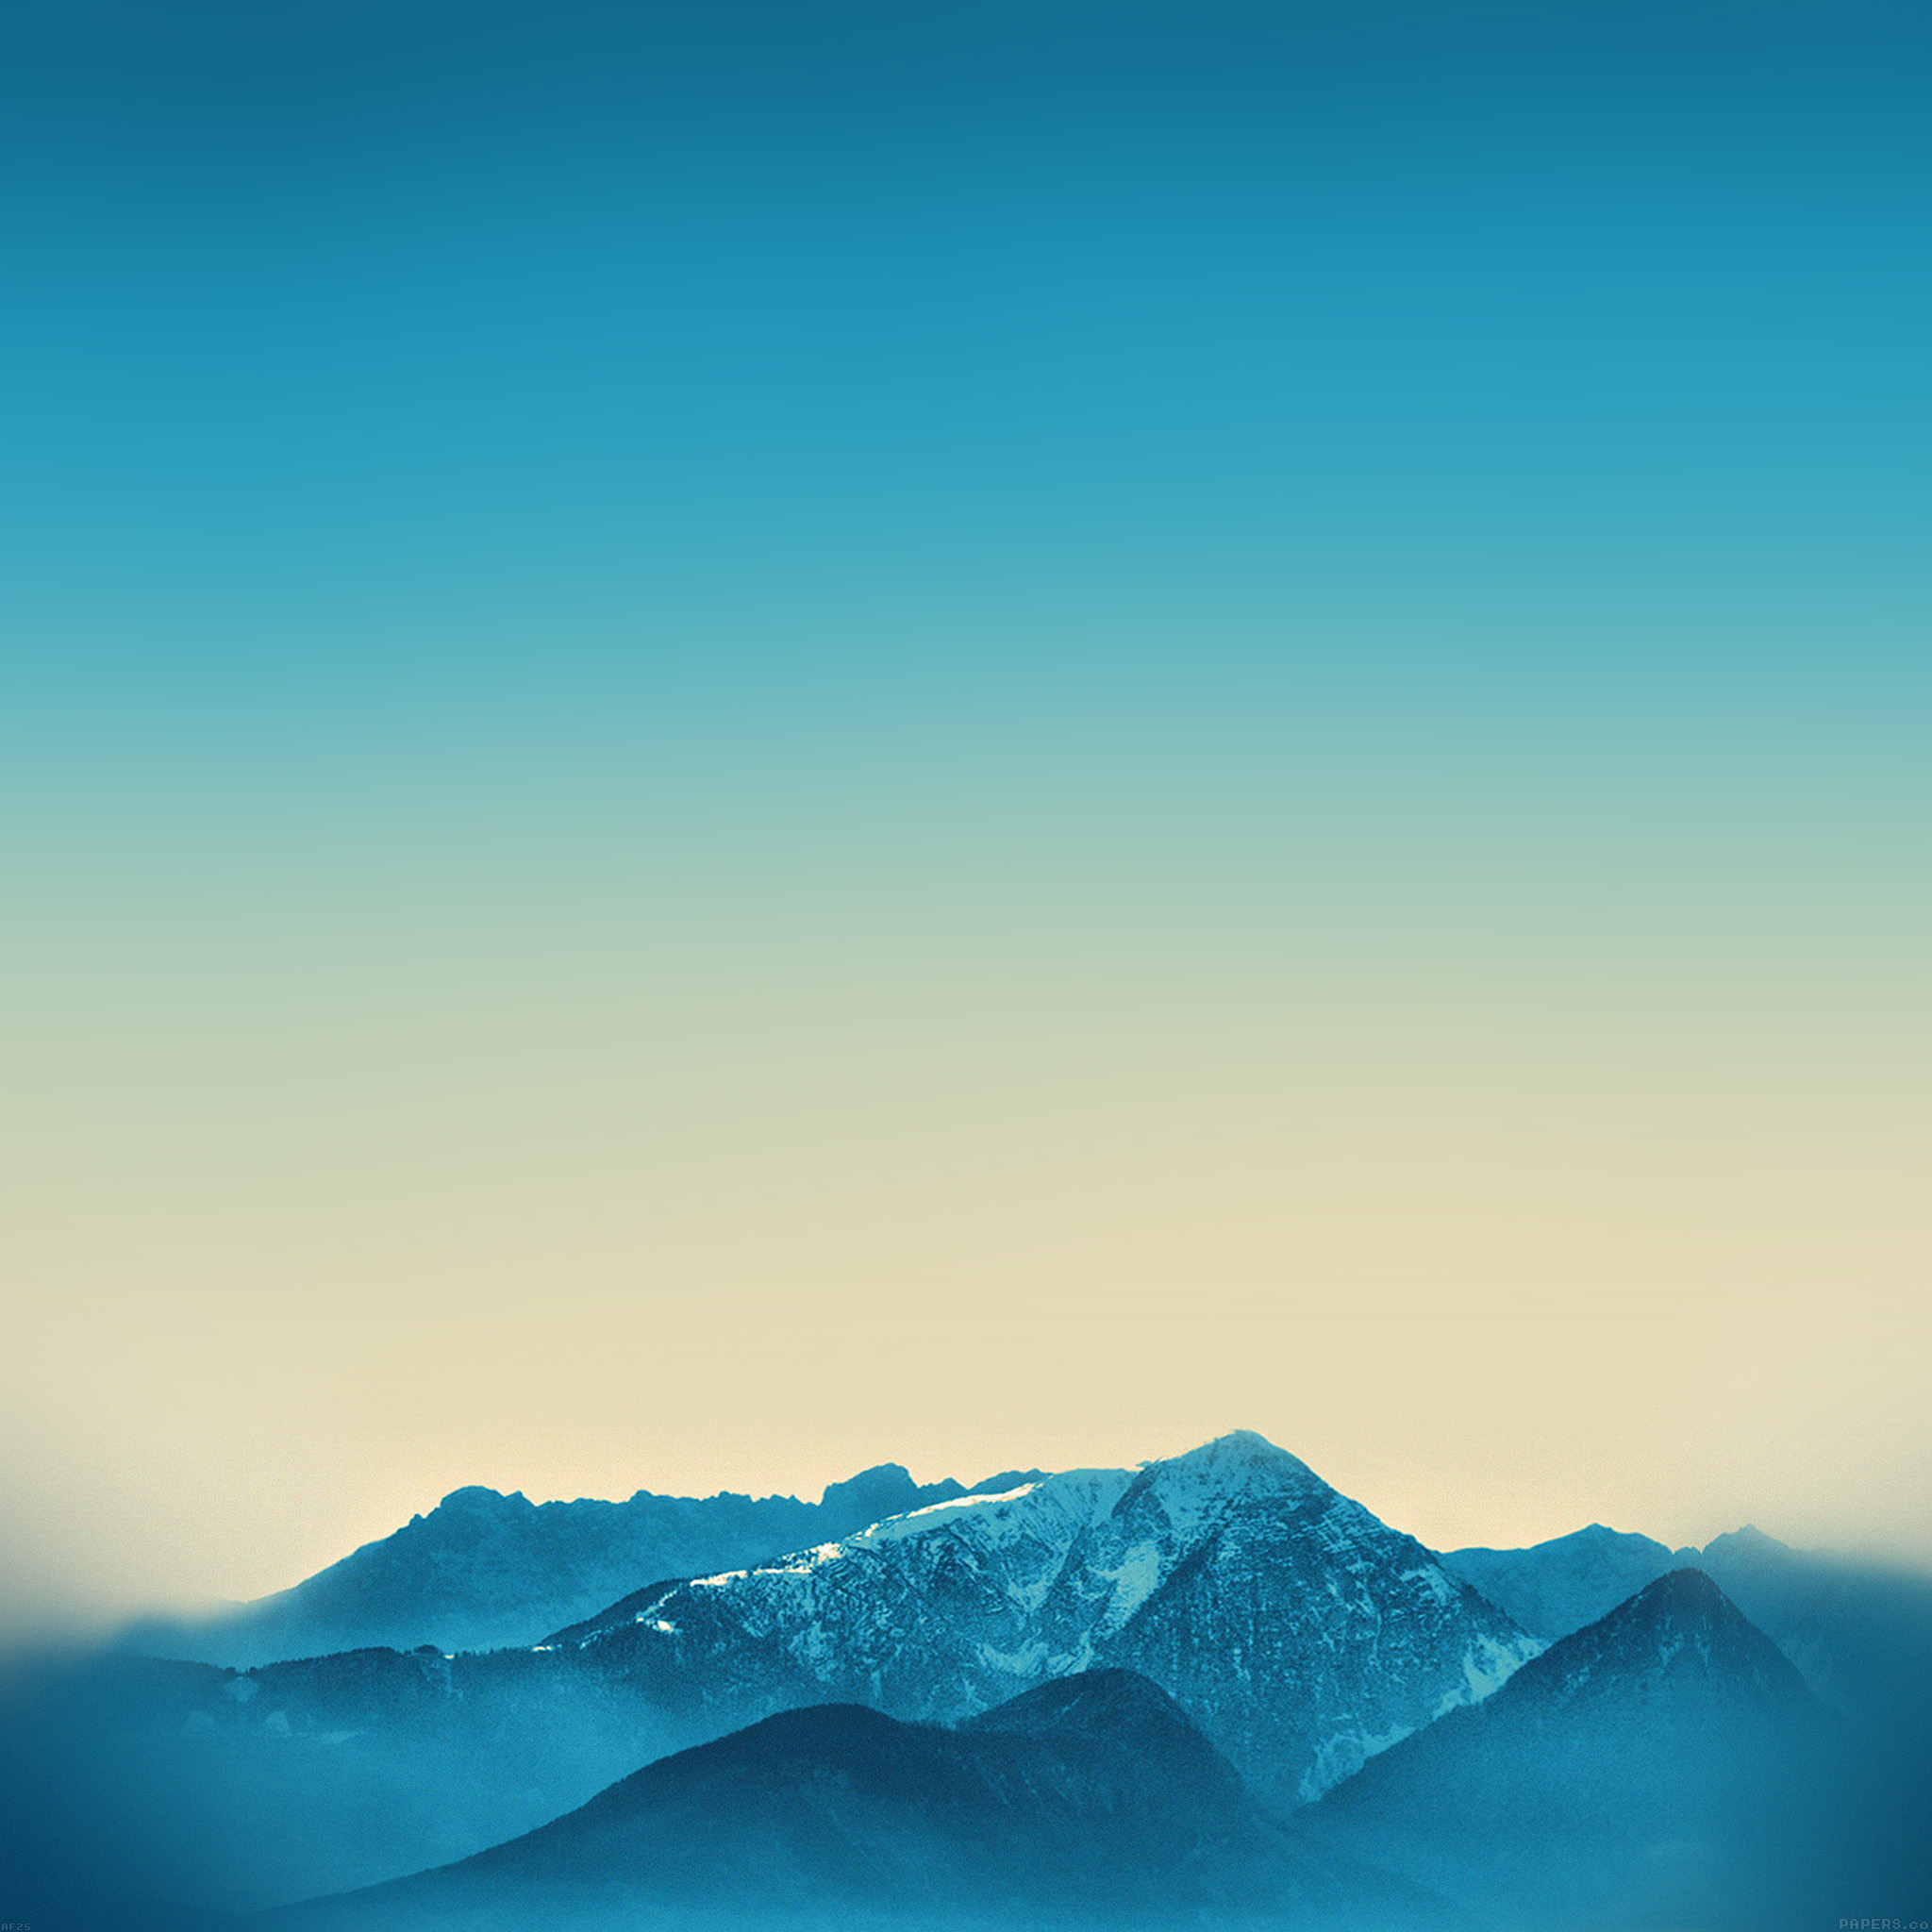 ipad wallpaper art,sky,blue,nature,mountainous landforms,mountain.